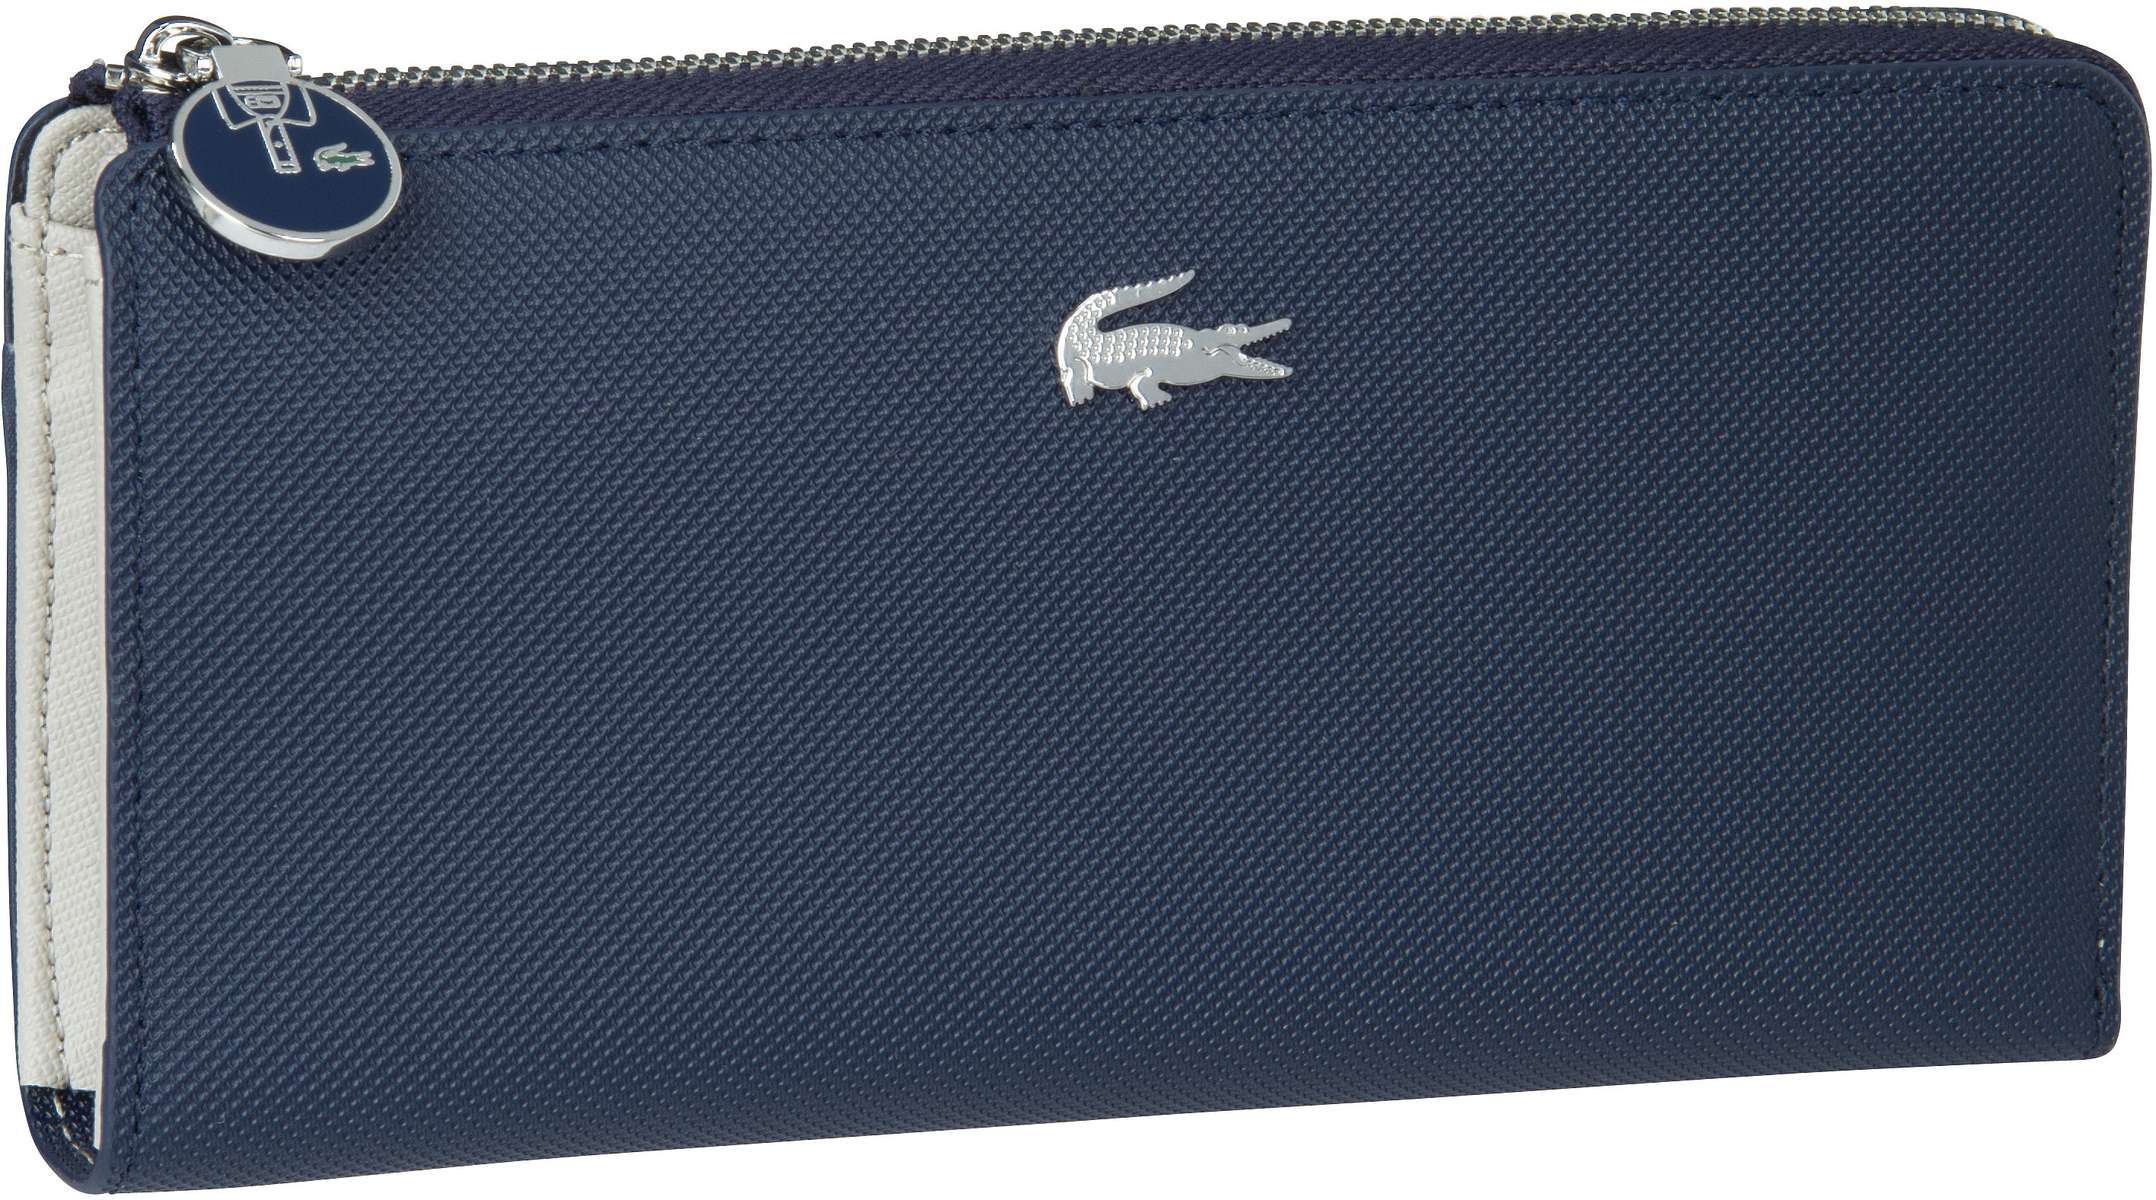 Lacoste Daily Classic Slim Zip Wallet 2780 - Navy